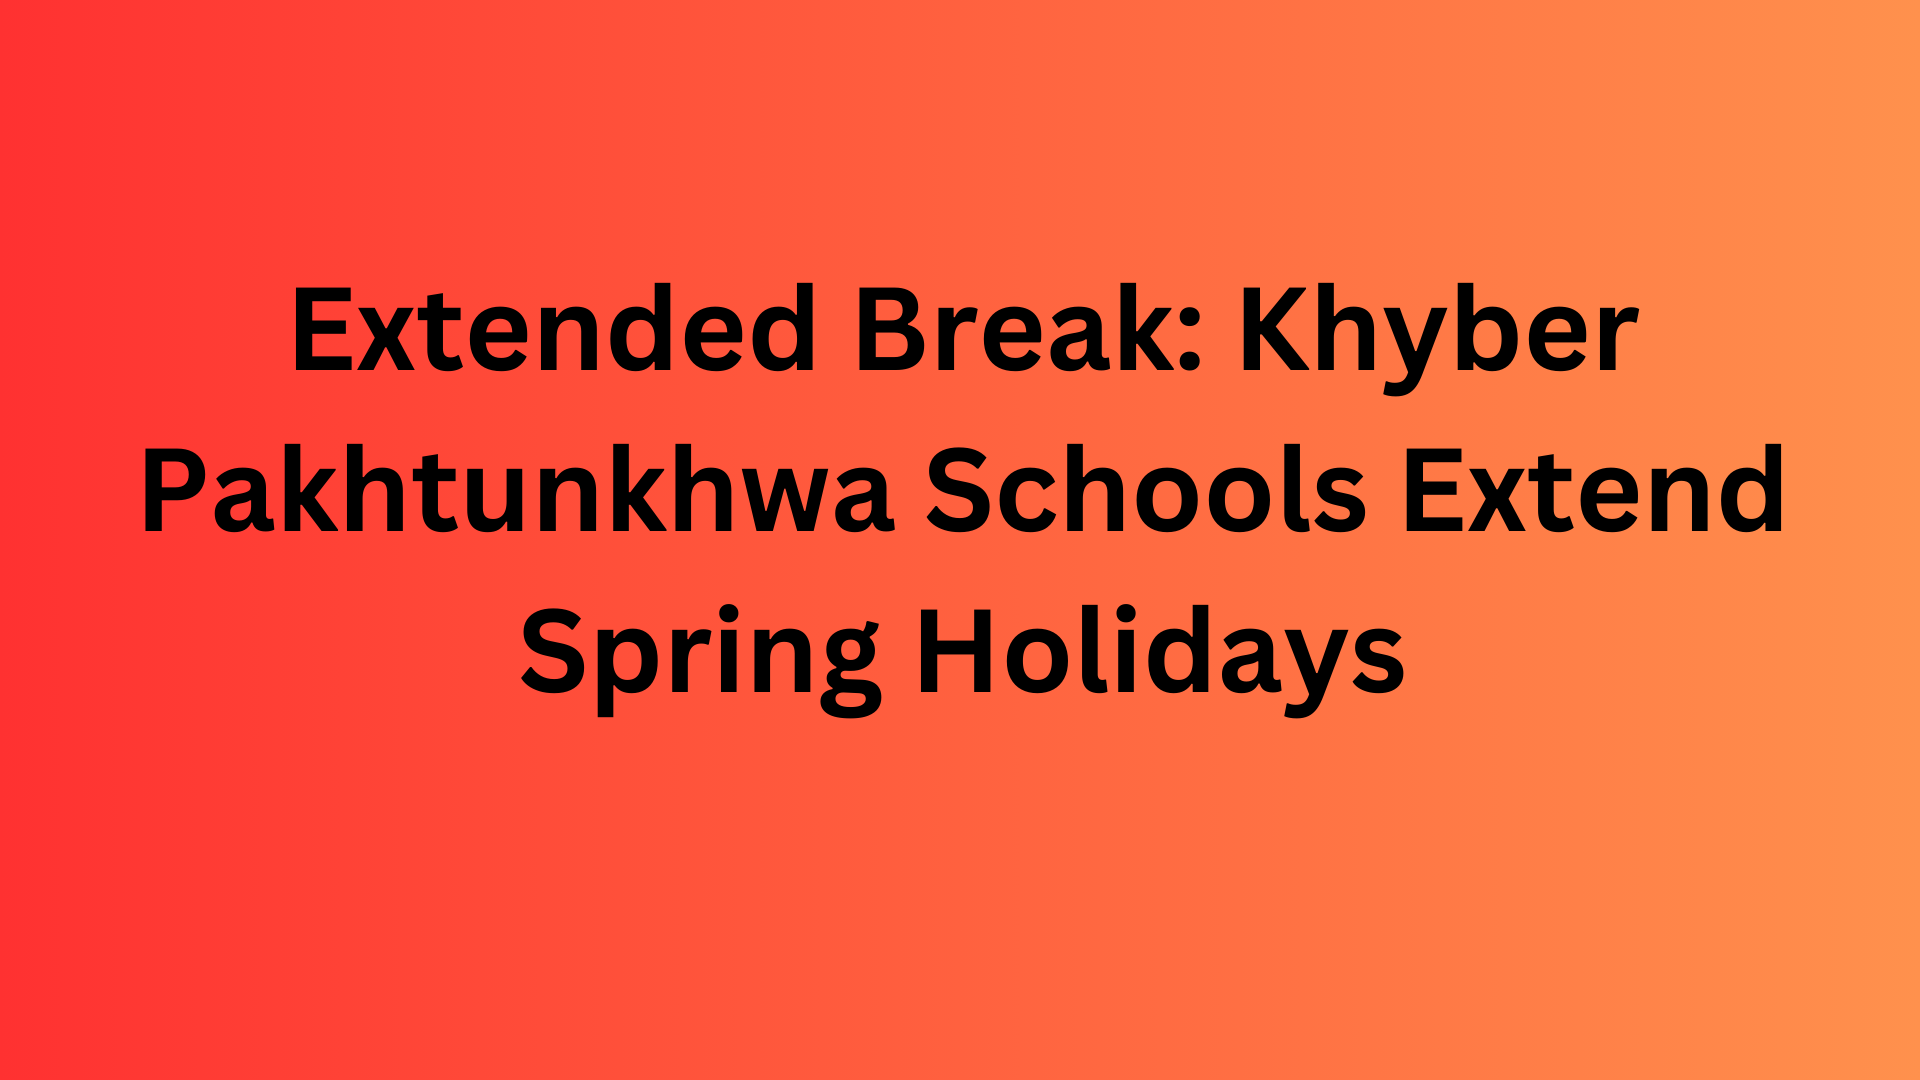 Extended Break Khyber Pakhtunkhwa Schools Extend Spring Holidays